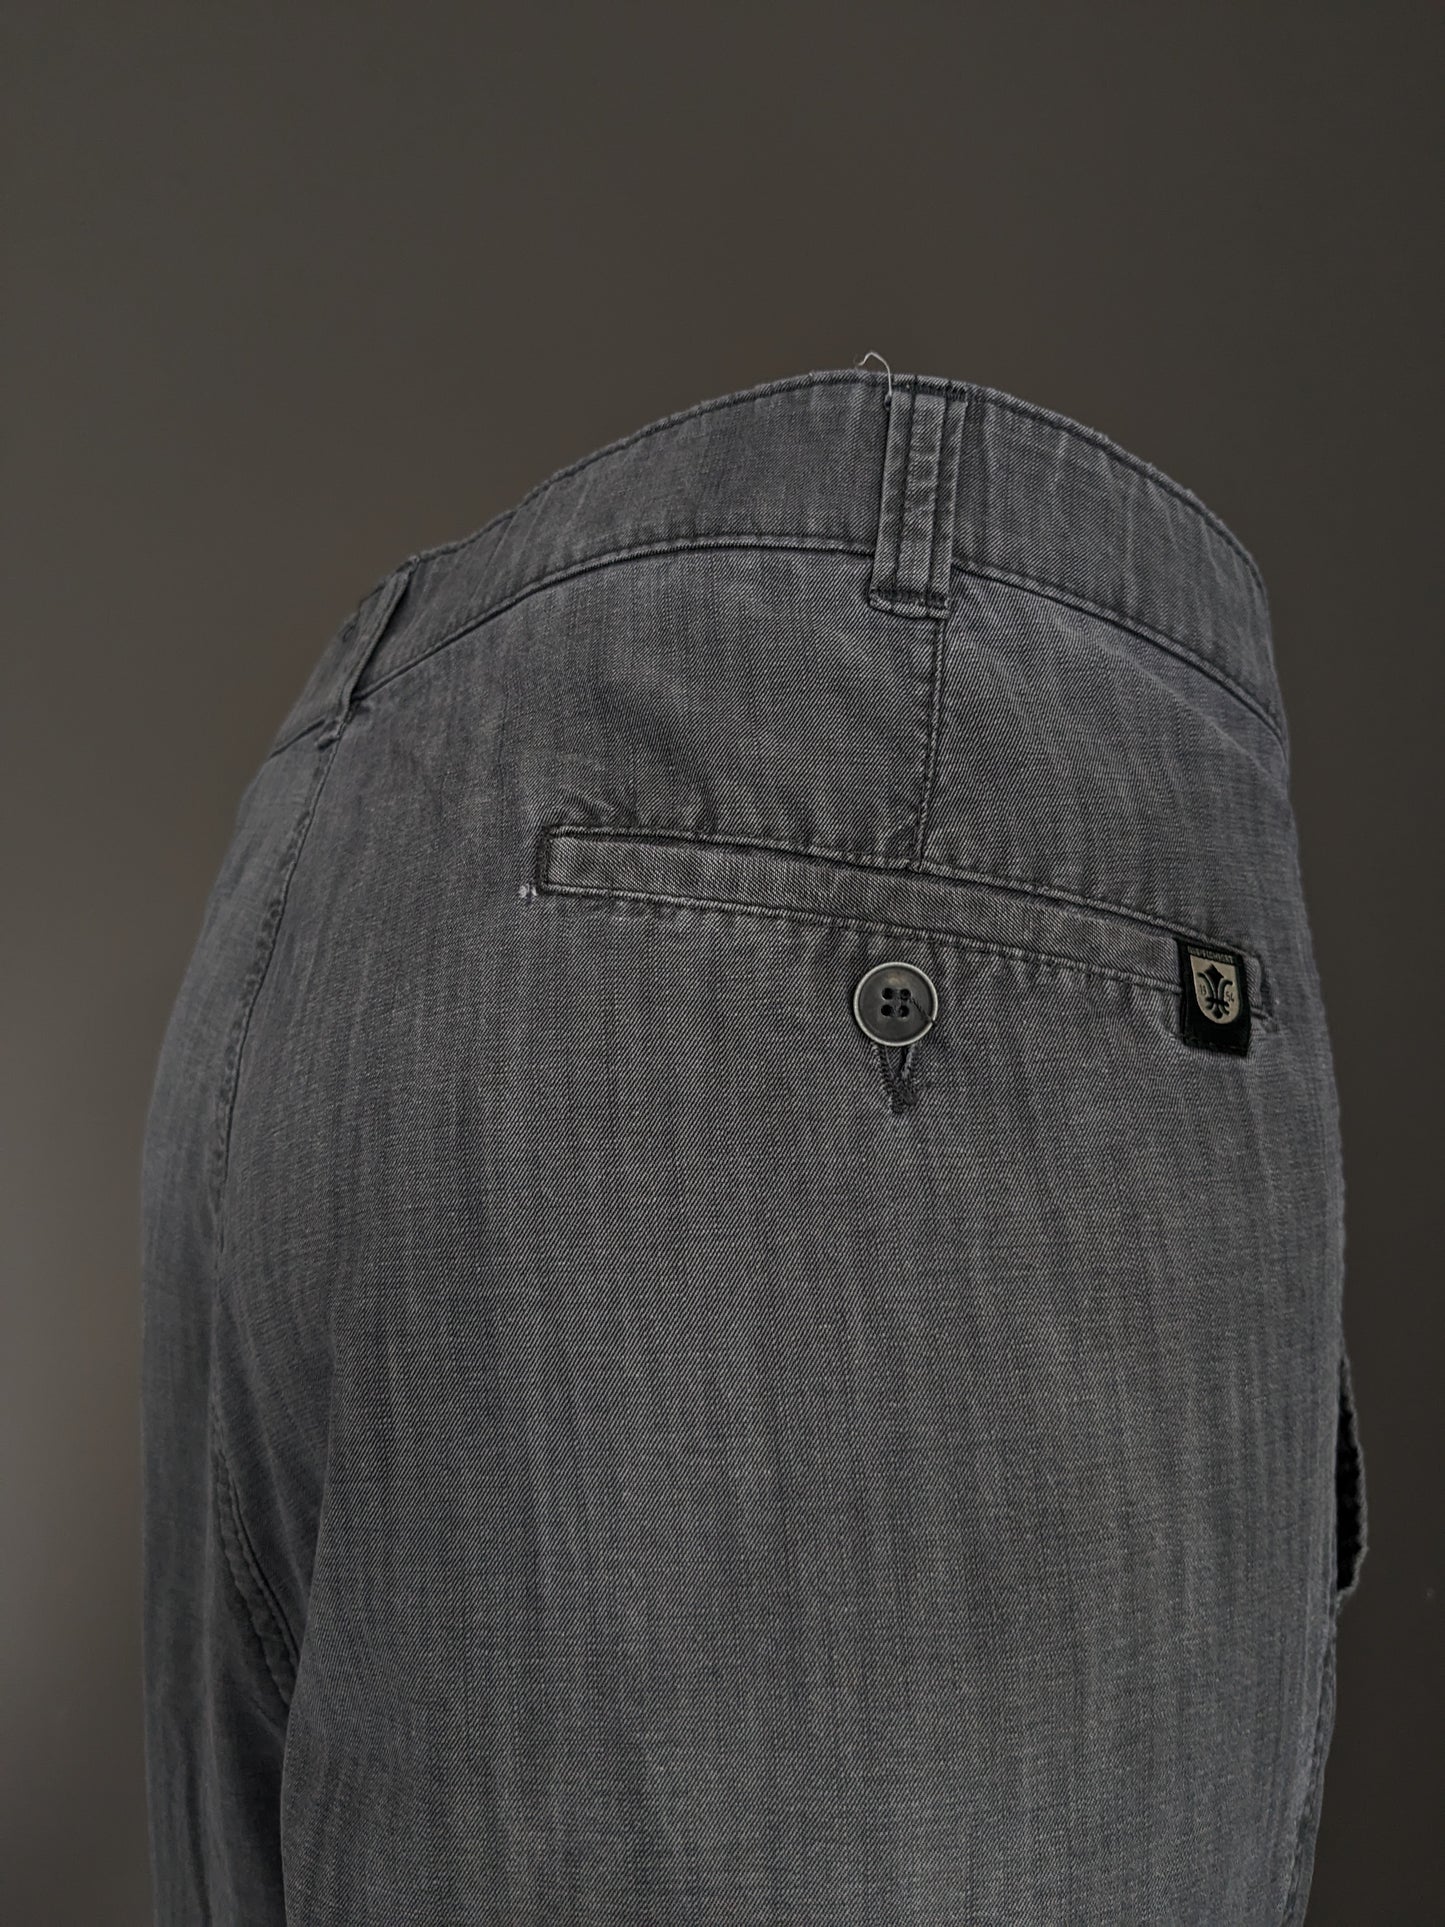 Club or comfort trousers / pants. Gray motif. Size 29 (58 / 2XL / XXL)